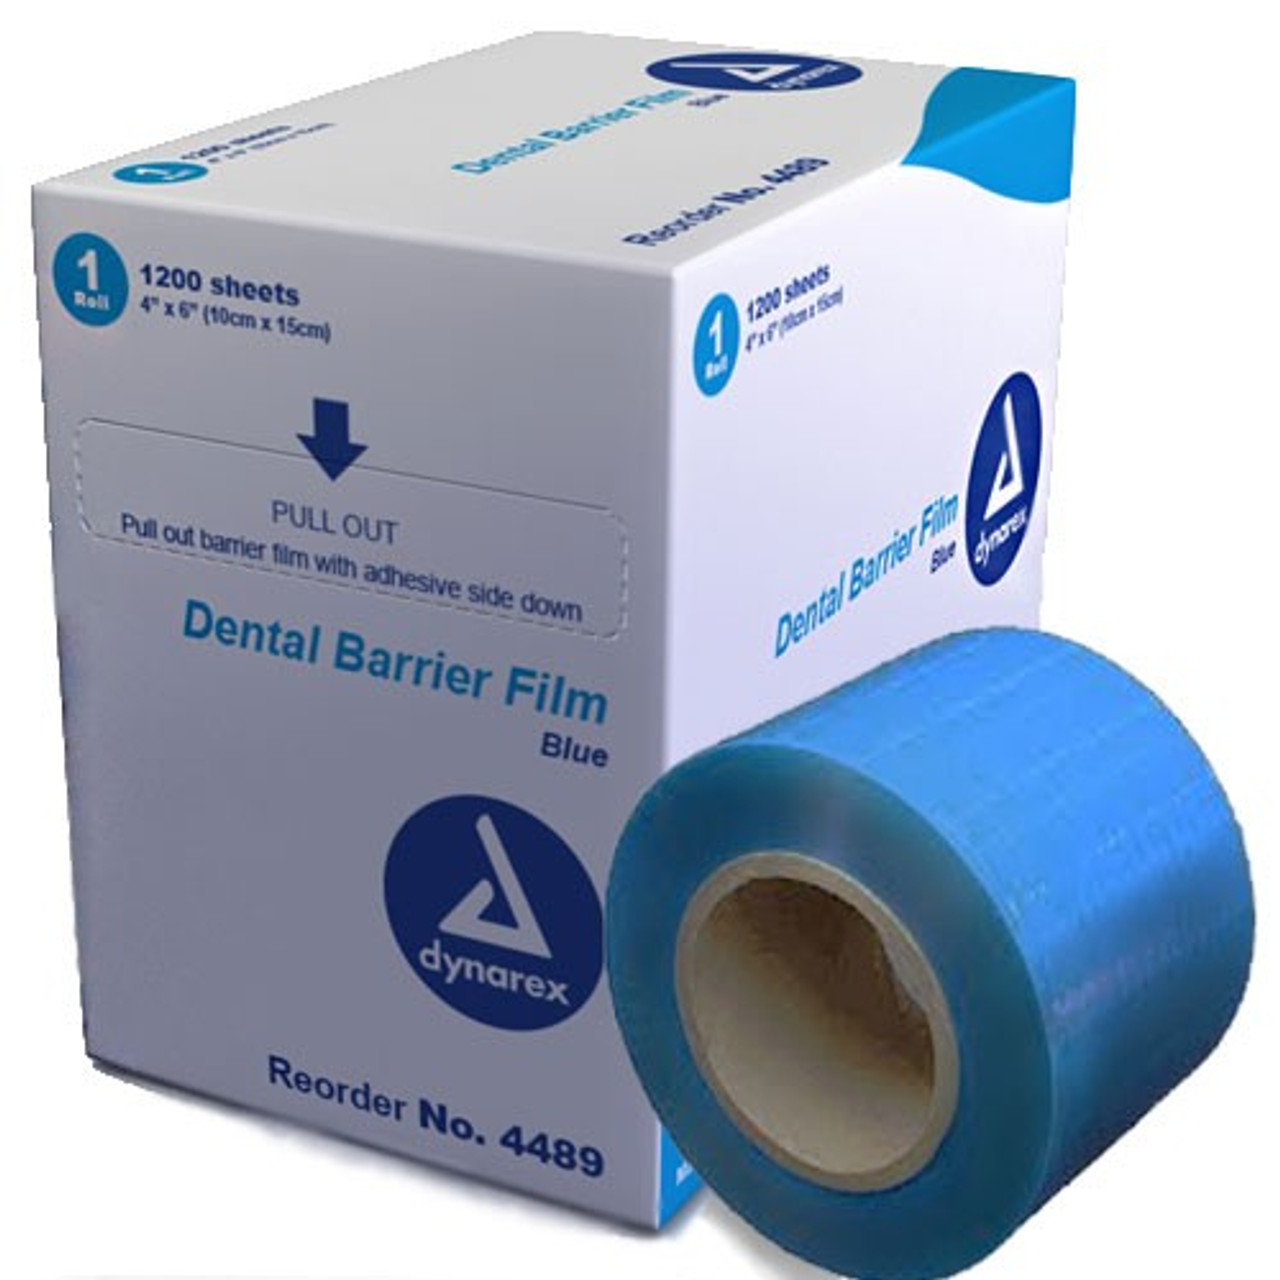 Dynarex Barrier Film Roll, Options: Blue or Clear